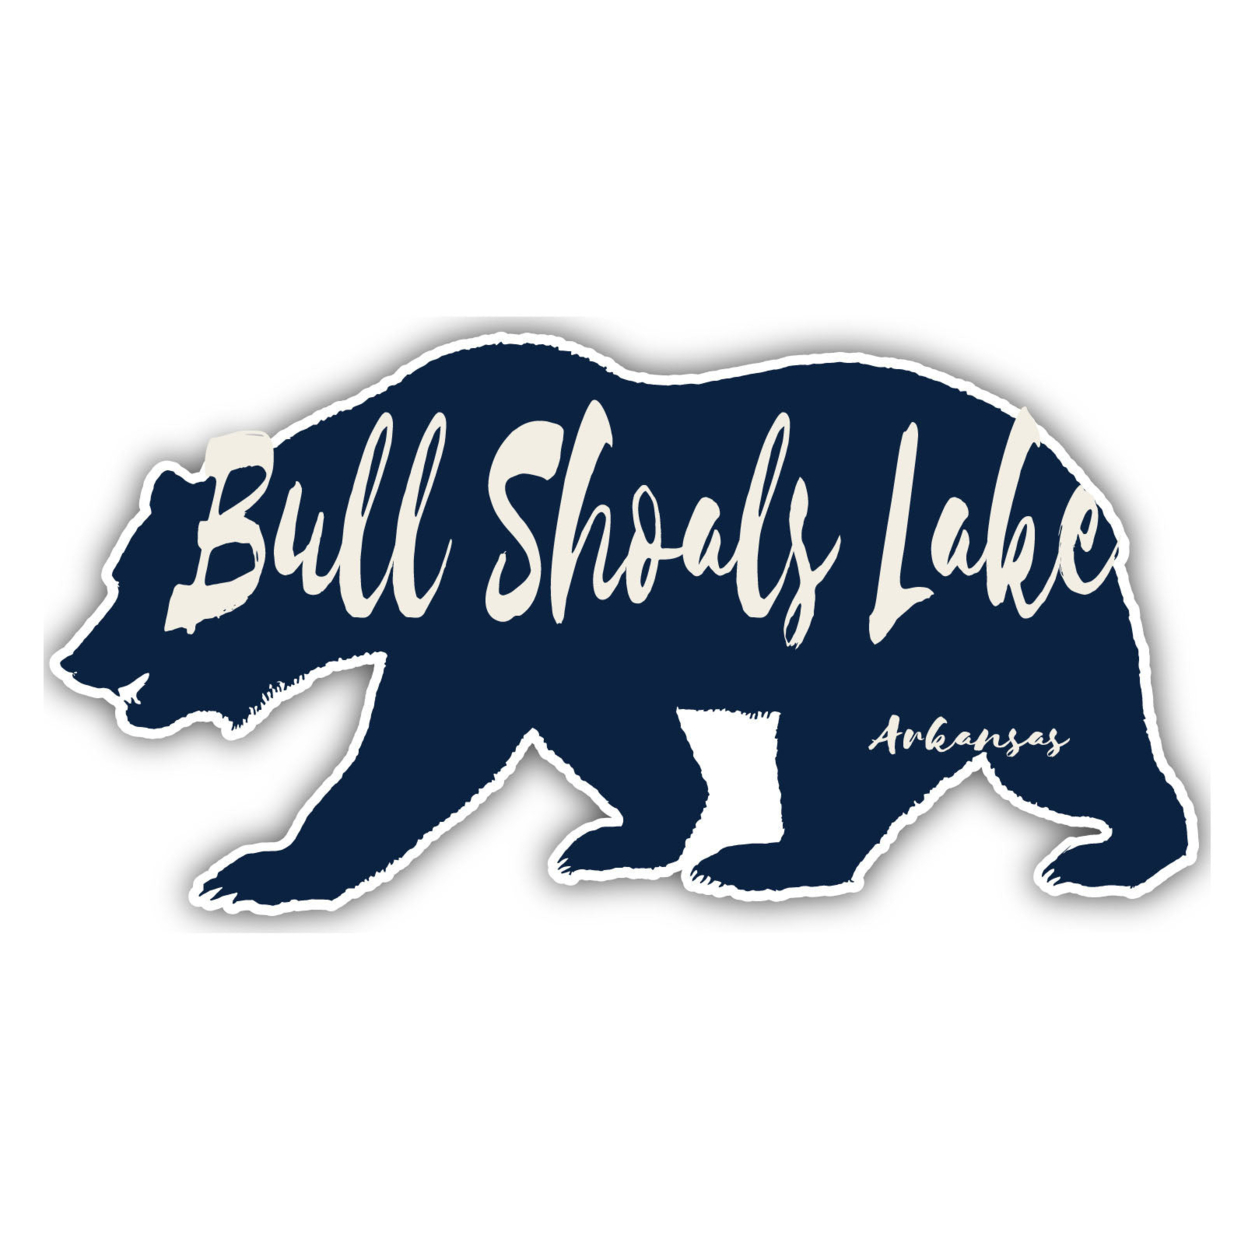 Bull Shoals Lake Arkansas Souvenir Decorative Stickers (Choose Theme And Size) - 4-Pack, 2-Inch, Adventures Awaits